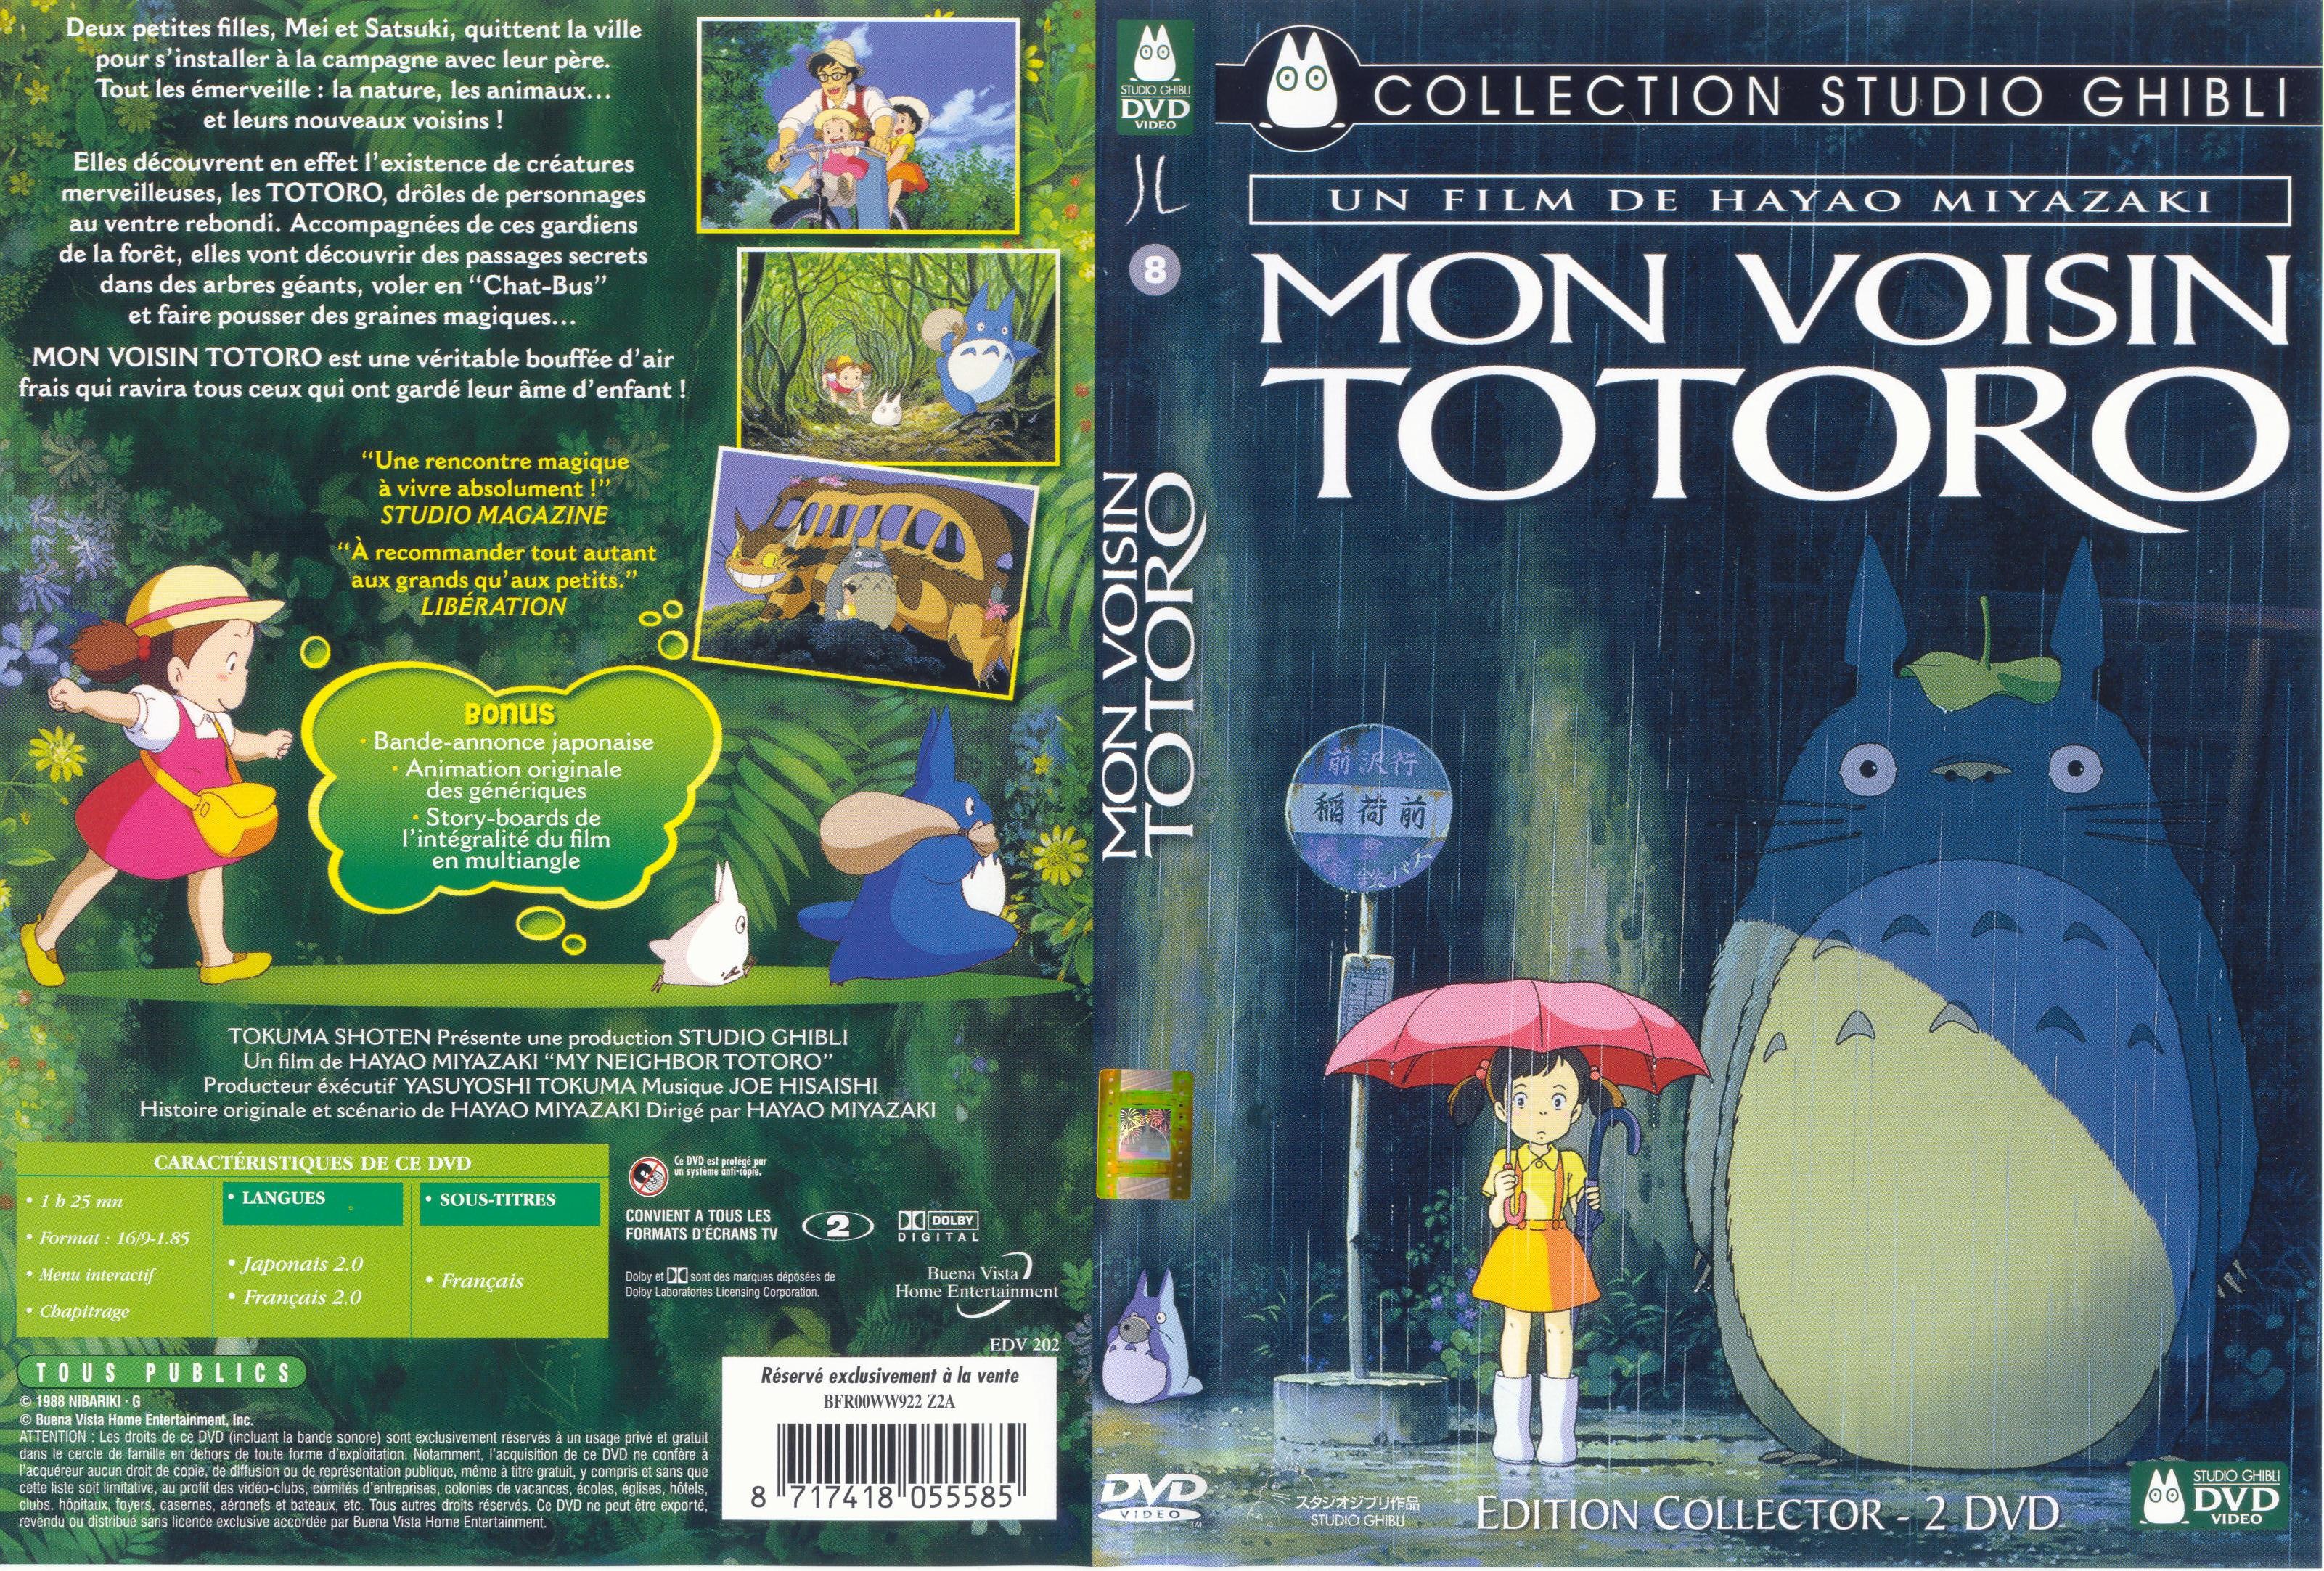 Jaquette DVD Mon voisin Totoro v2